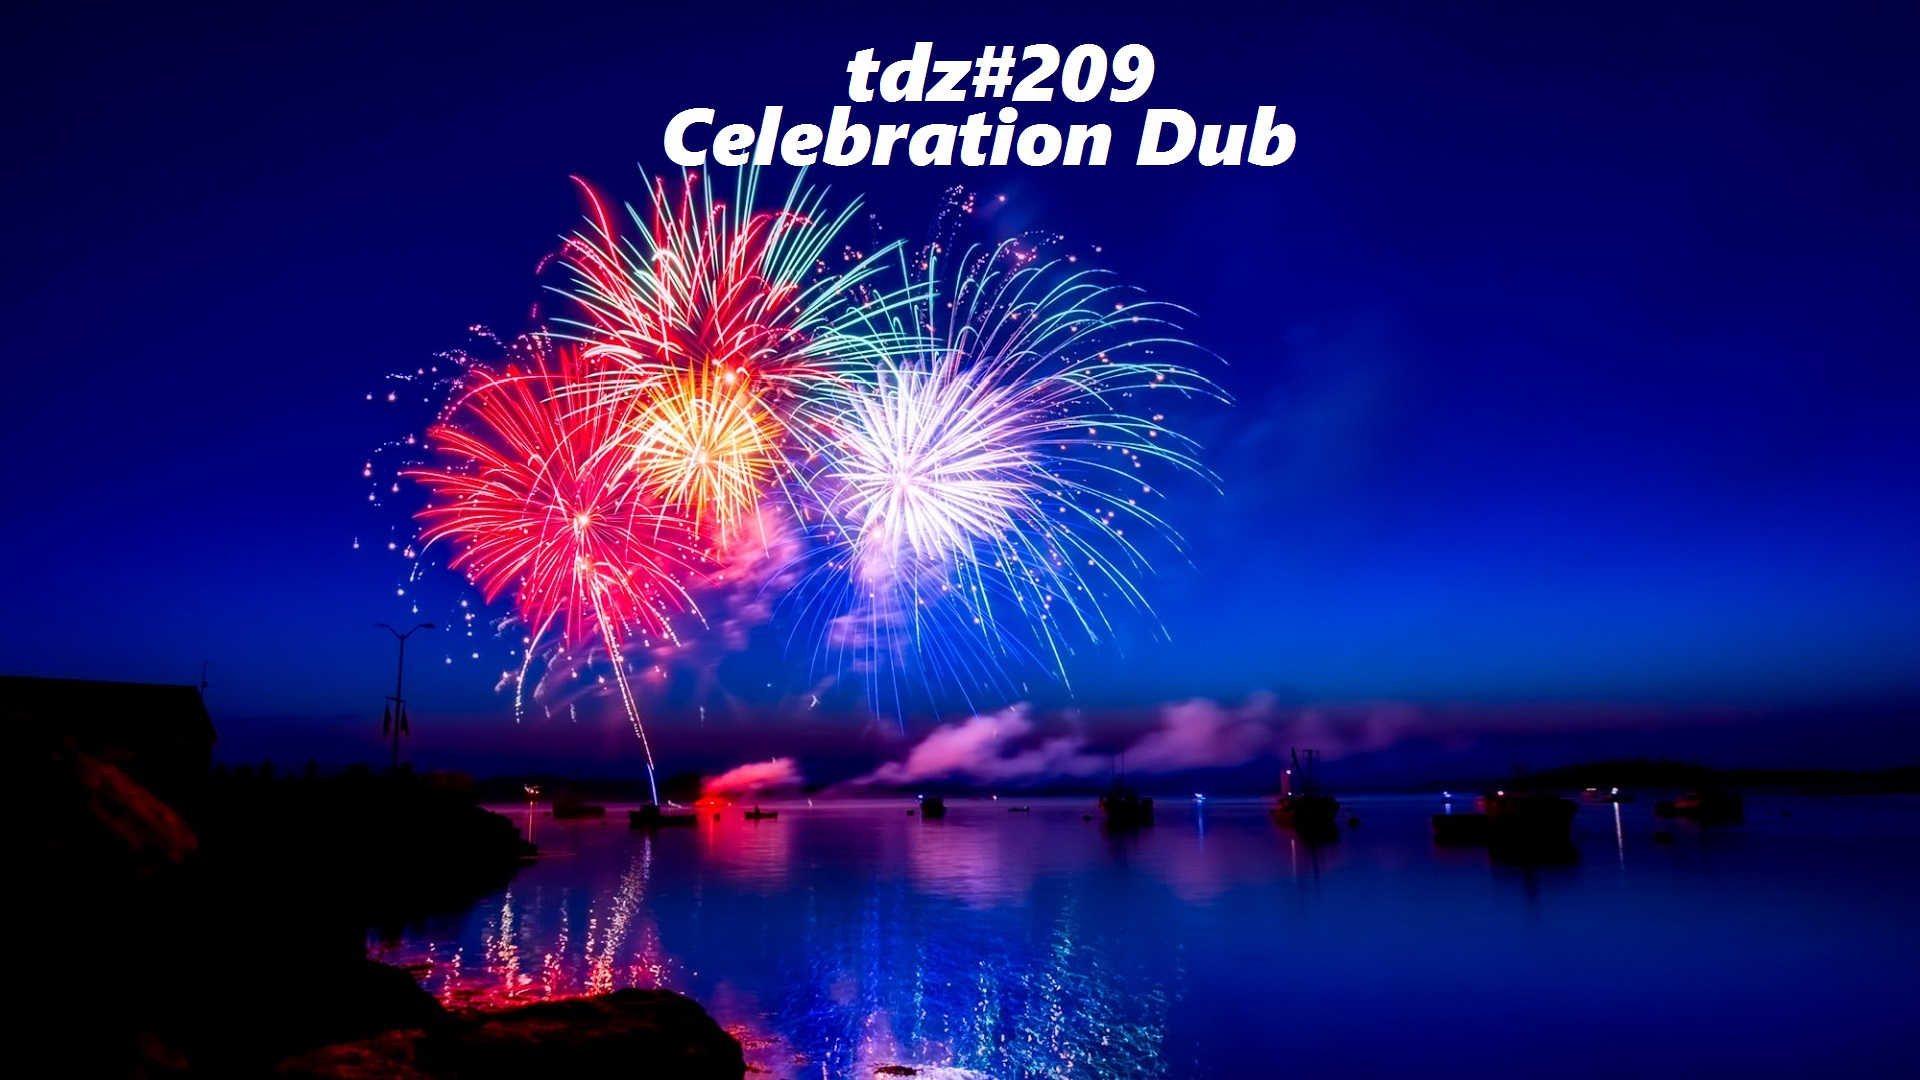 TDZ#209... Celebration Dub .....